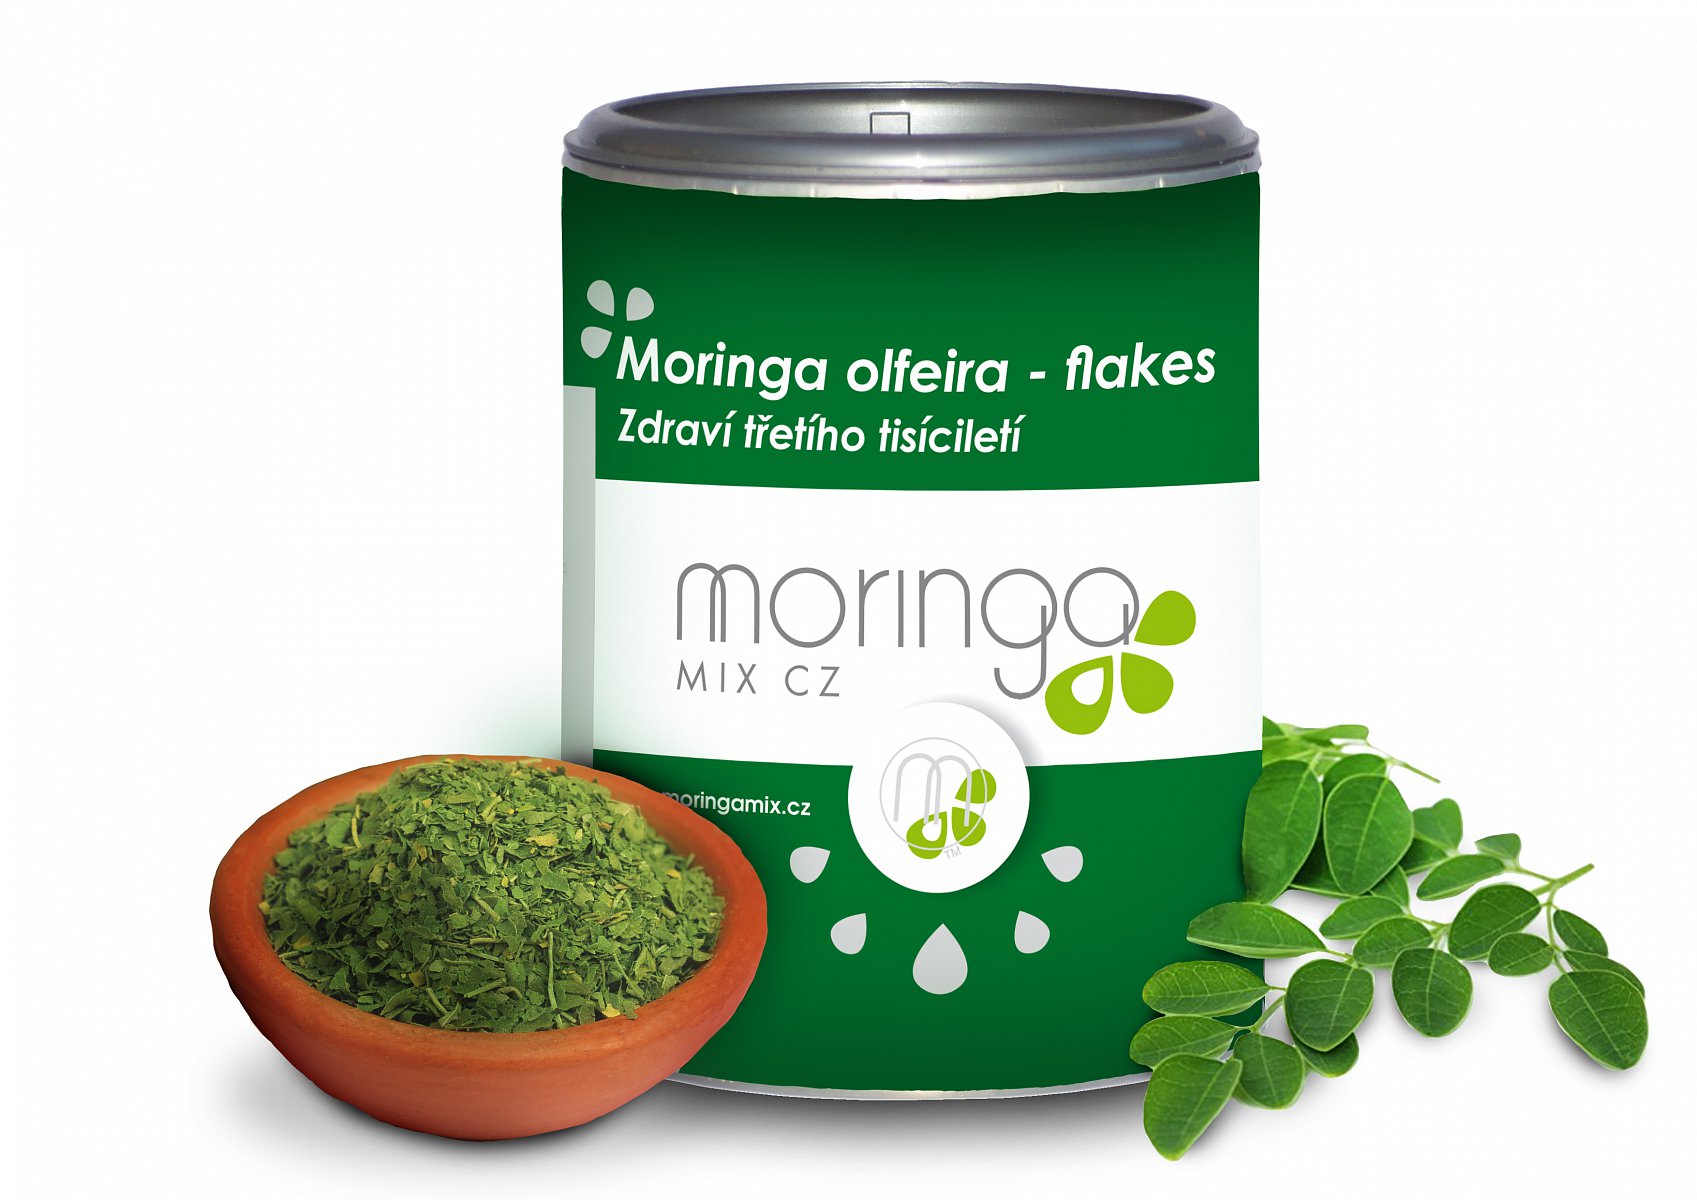 Moringa olejodárná 100% - flakes 100g